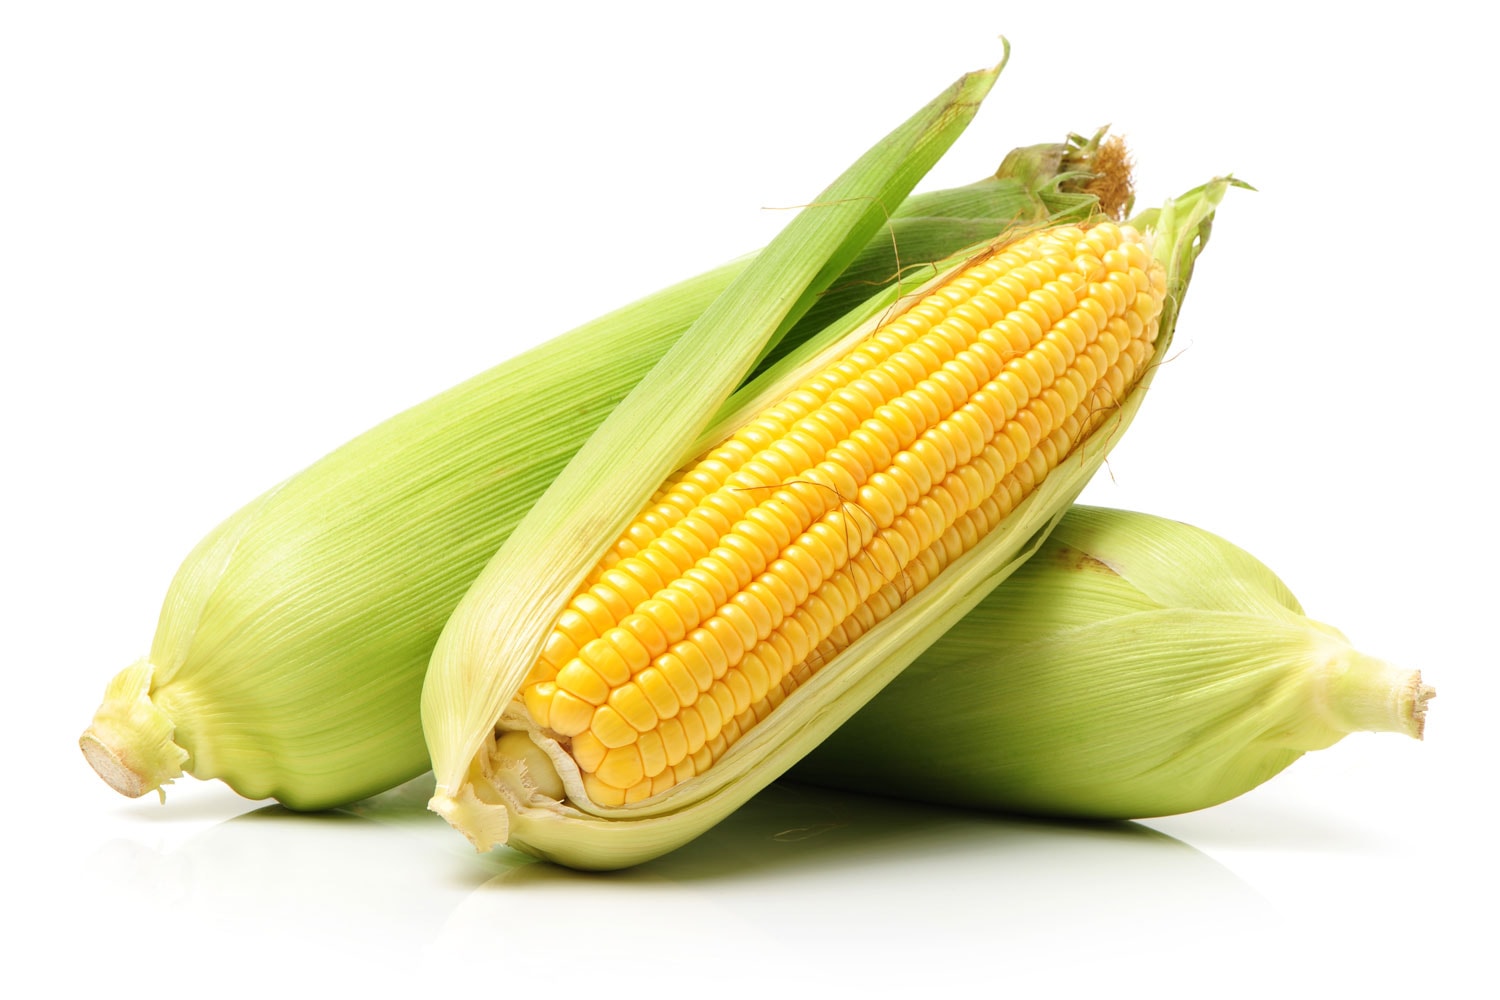 Corn on white background 